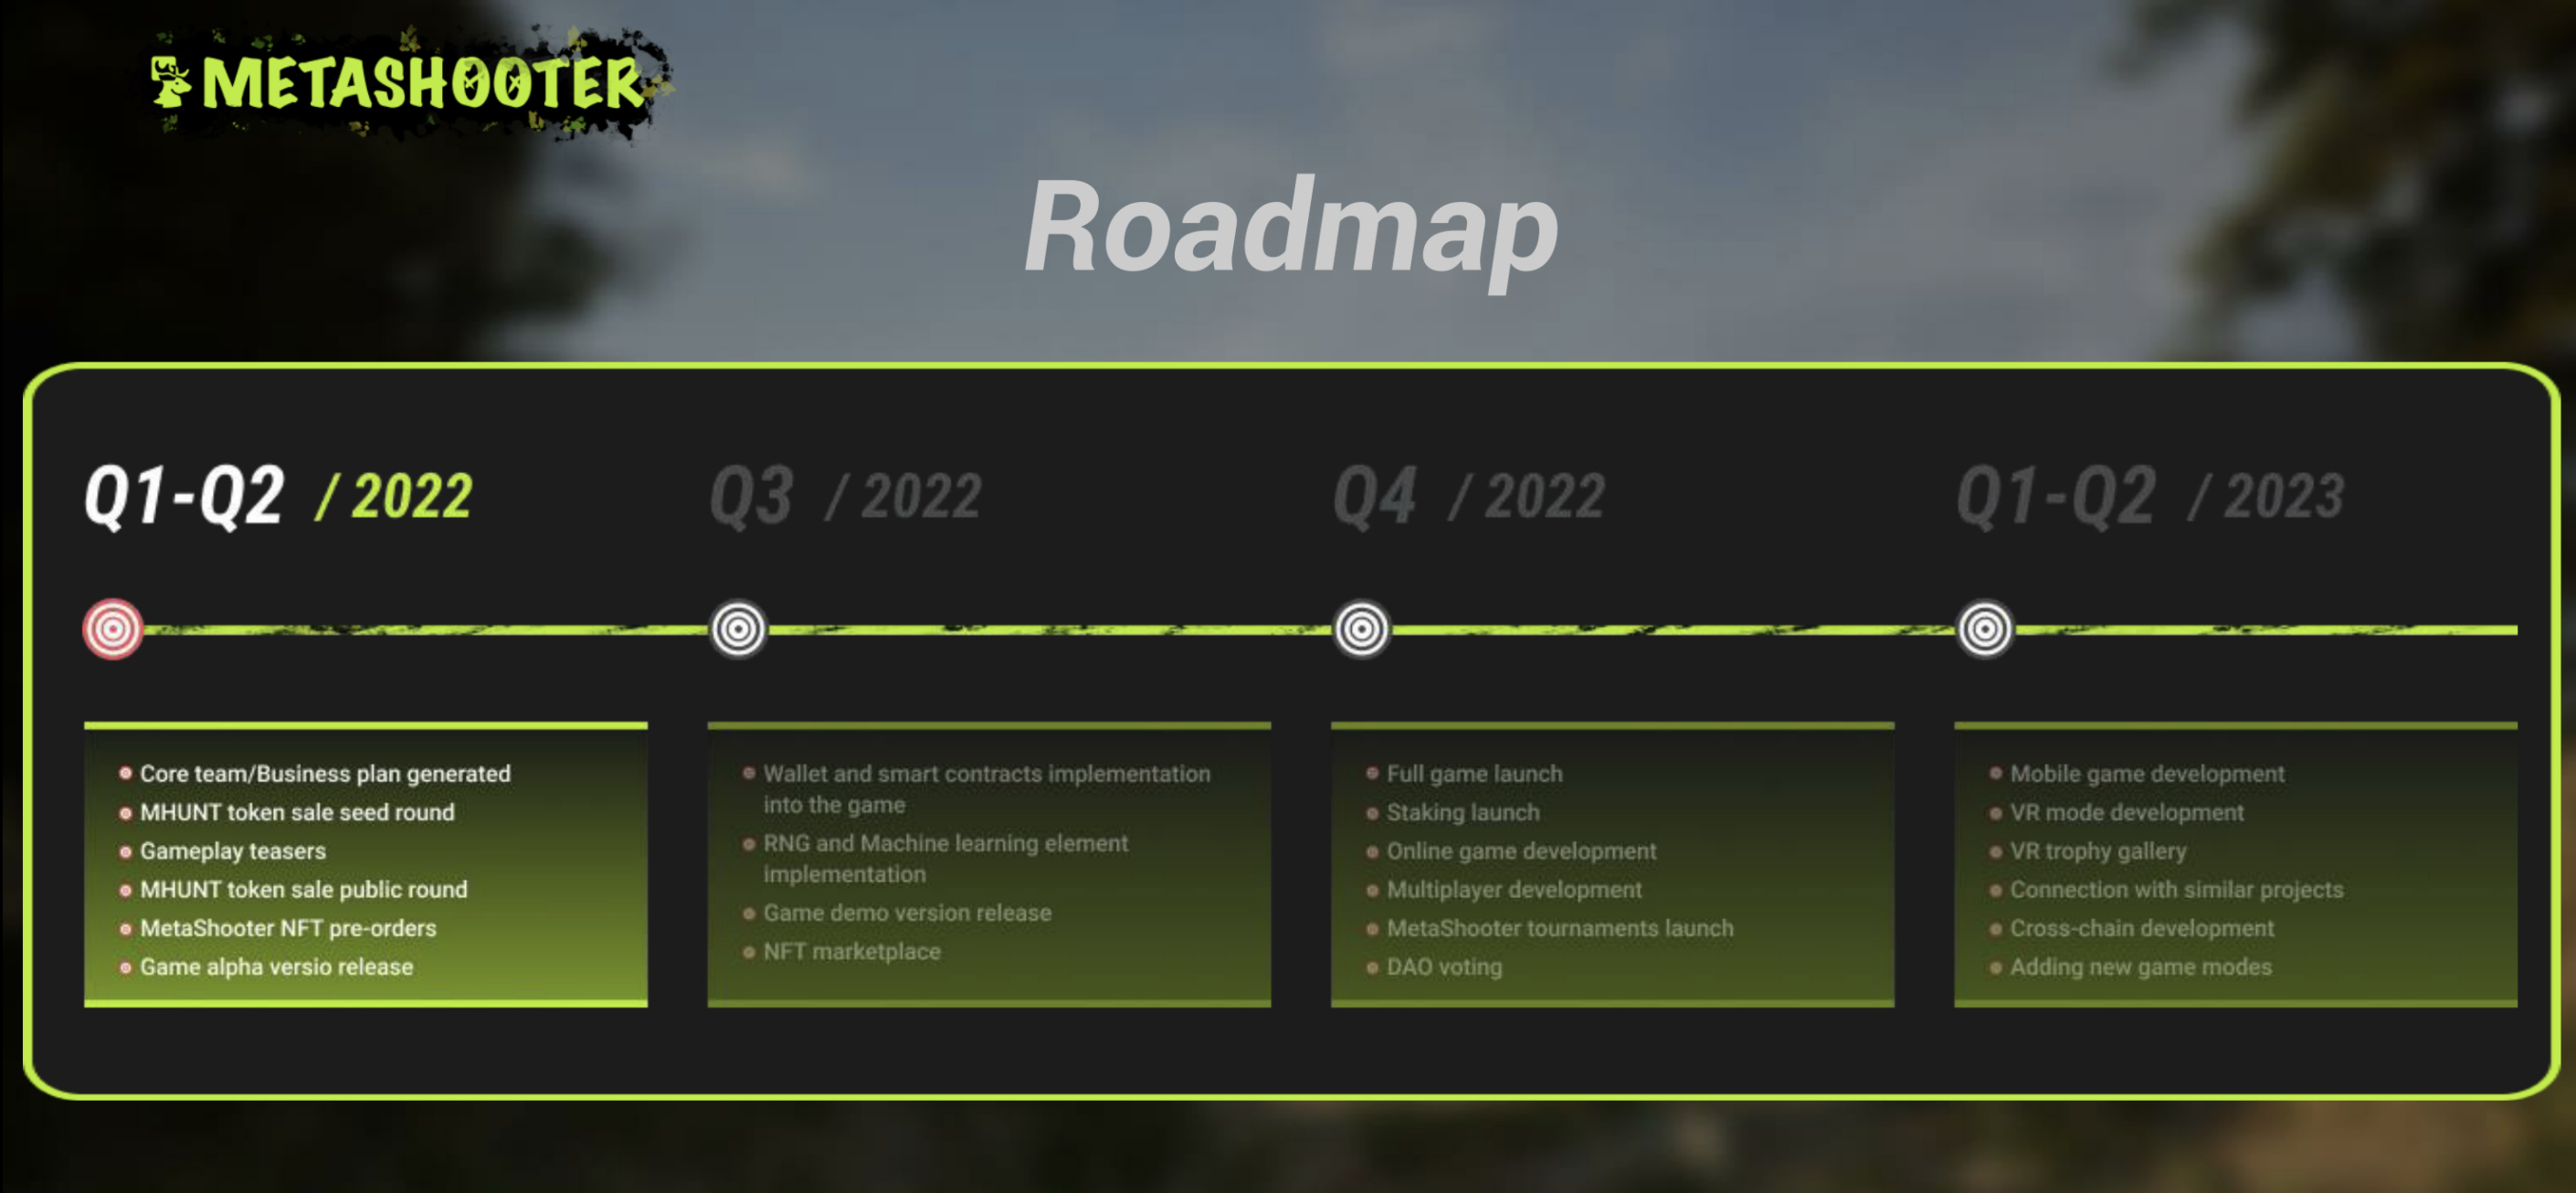 MetaShooter Roadmap